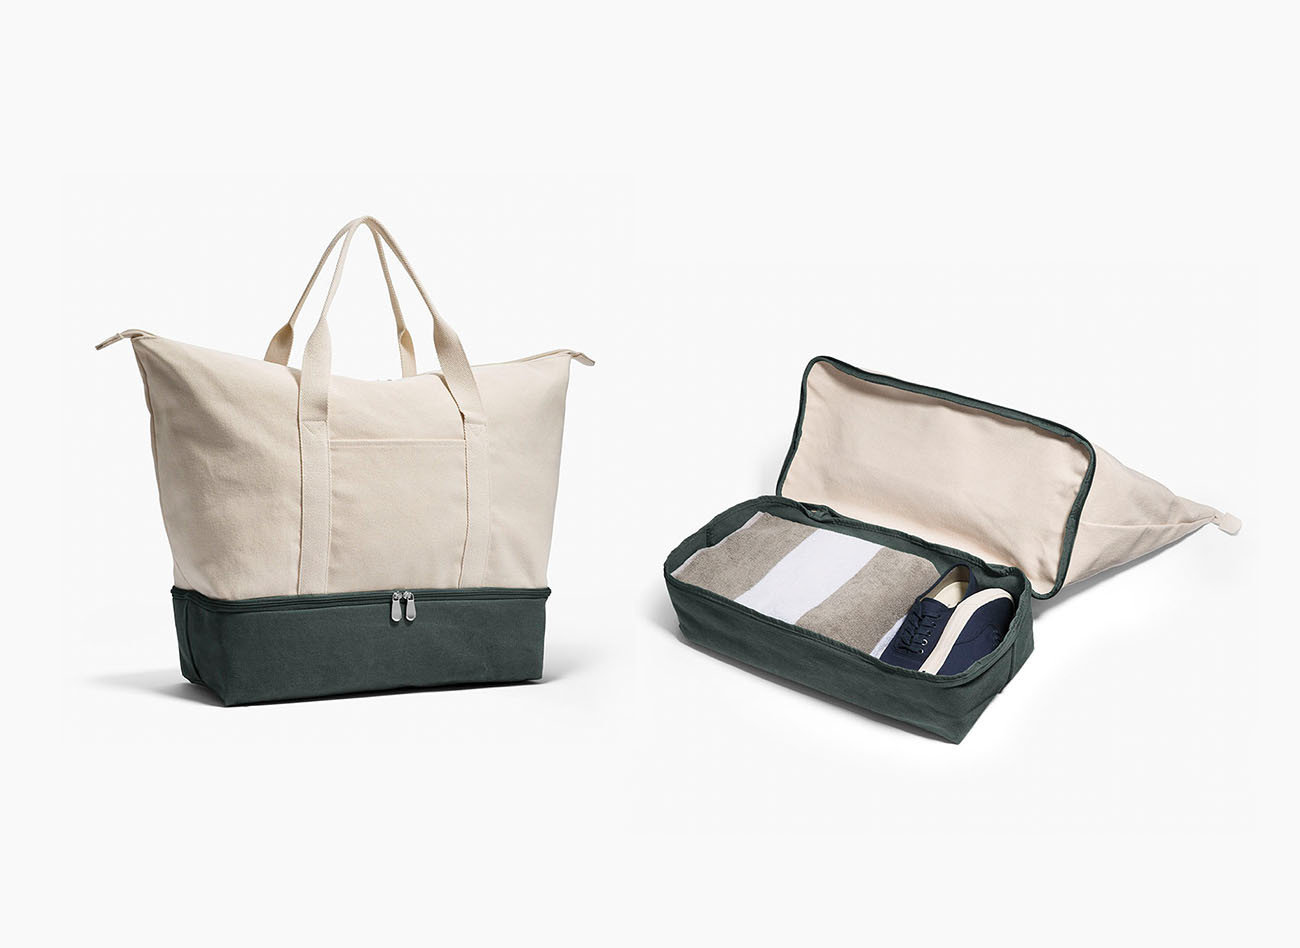 Travel Shop Travel Tech bag white handbag fashion accessory product product design beige shoulder bag brand leather